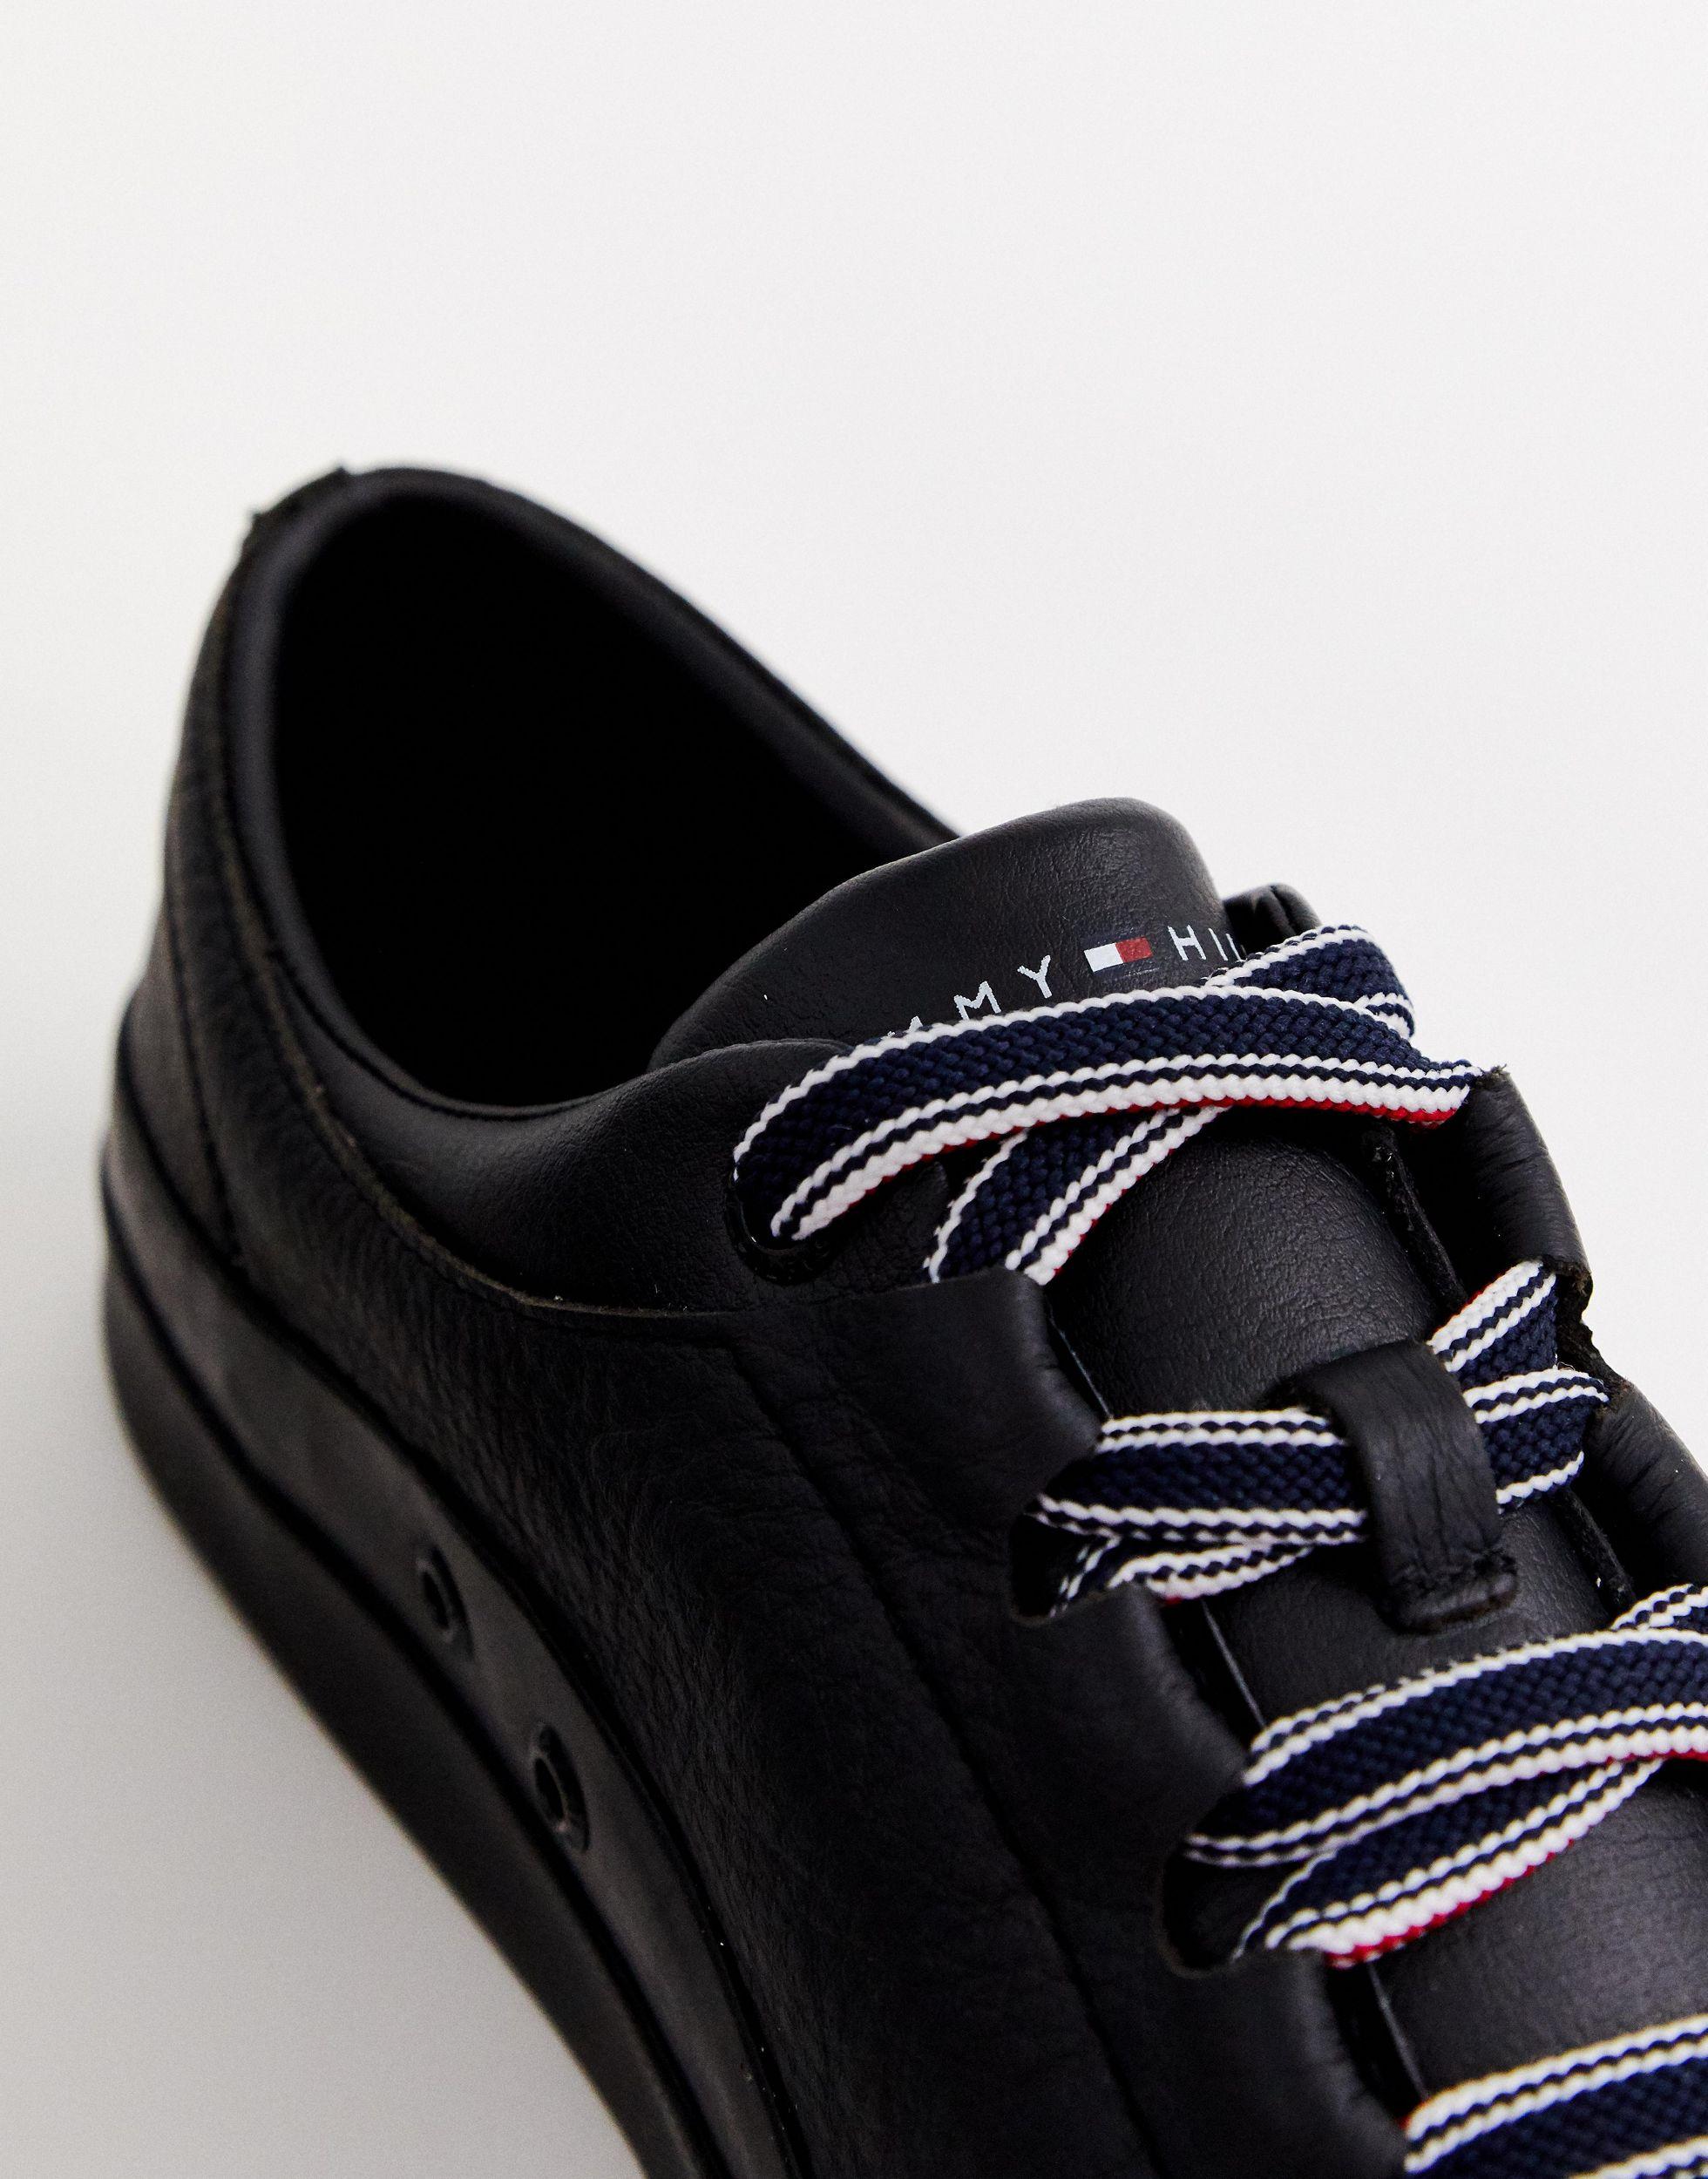 Tommy Hilfiger Corporate Stripe Leather Low Sneaker in Black for Men - Lyst